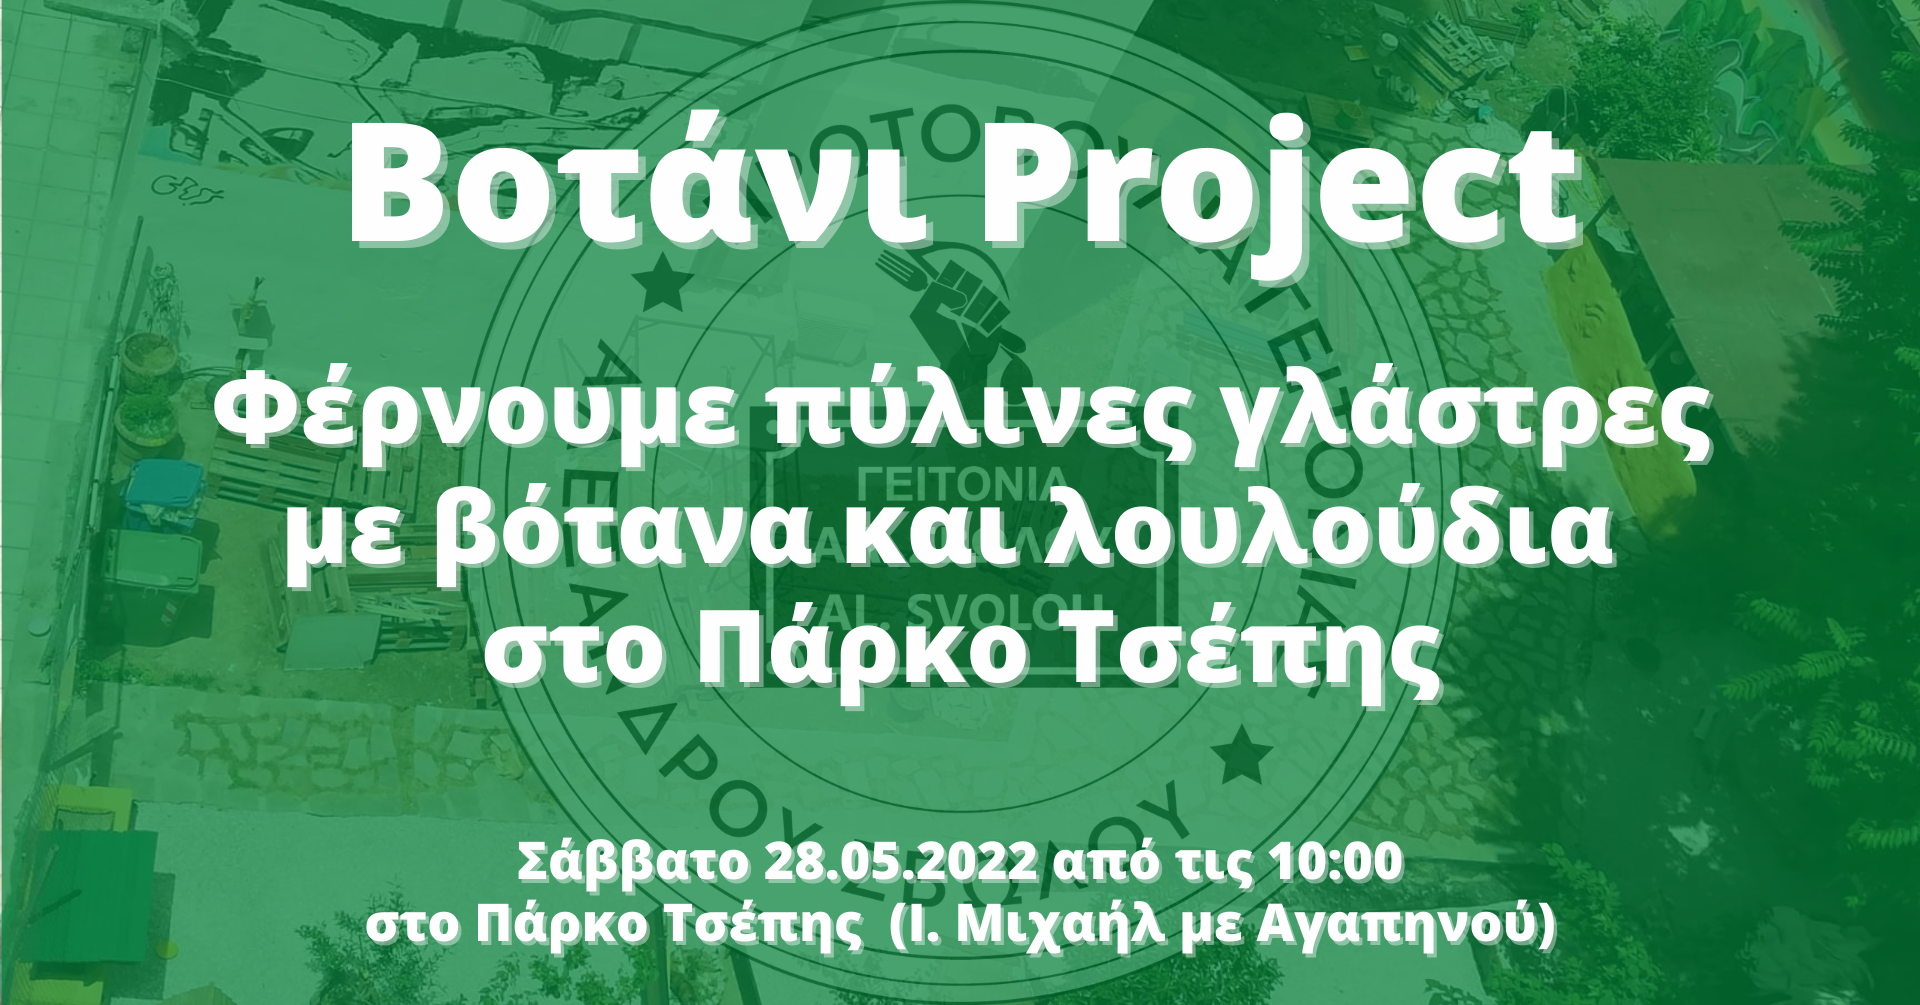 botani-project.png